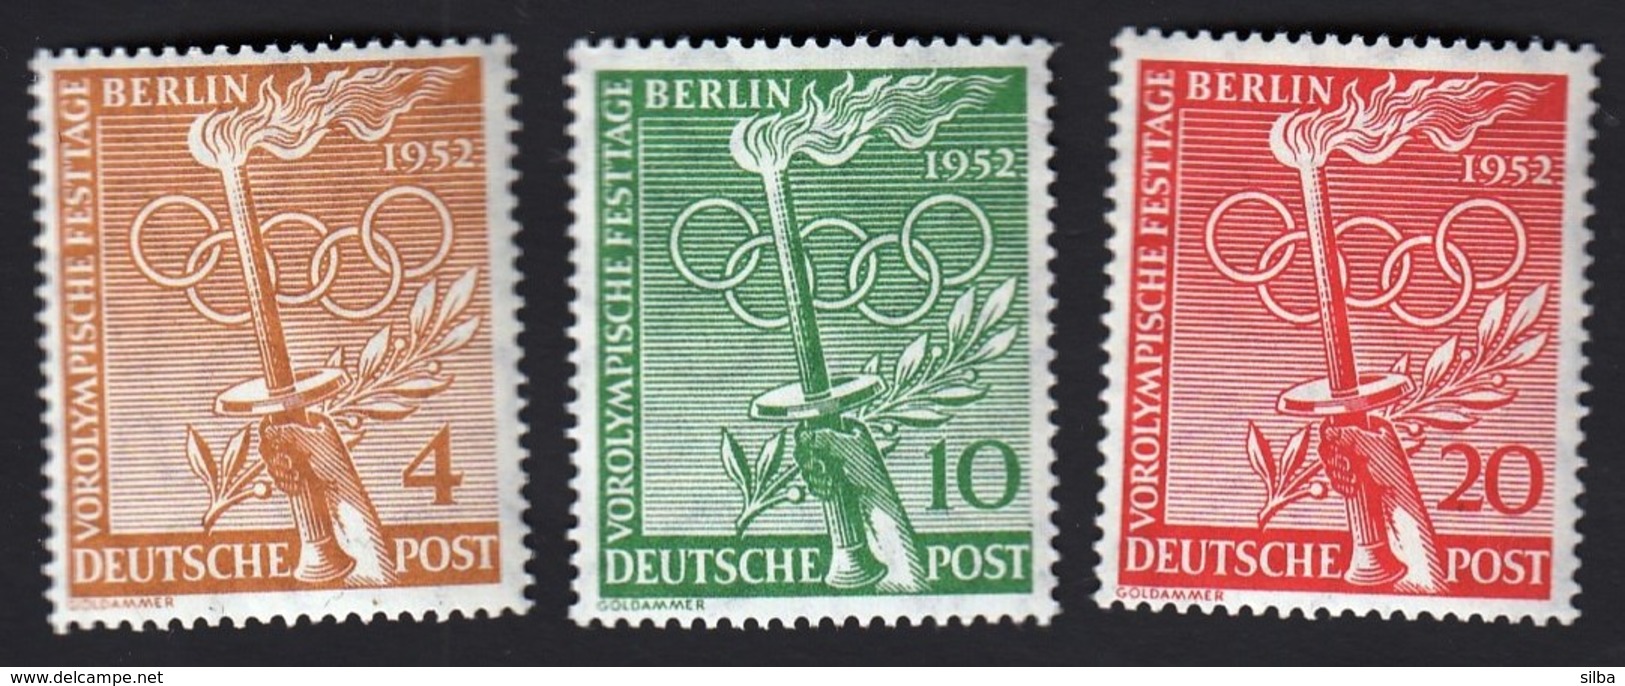 Germany Berlin 1952 / Olympic Games Helsinki / Pre-Olympic Festival Day, Torch / Mi 88-90 / MNH - Sommer 1952: Helsinki